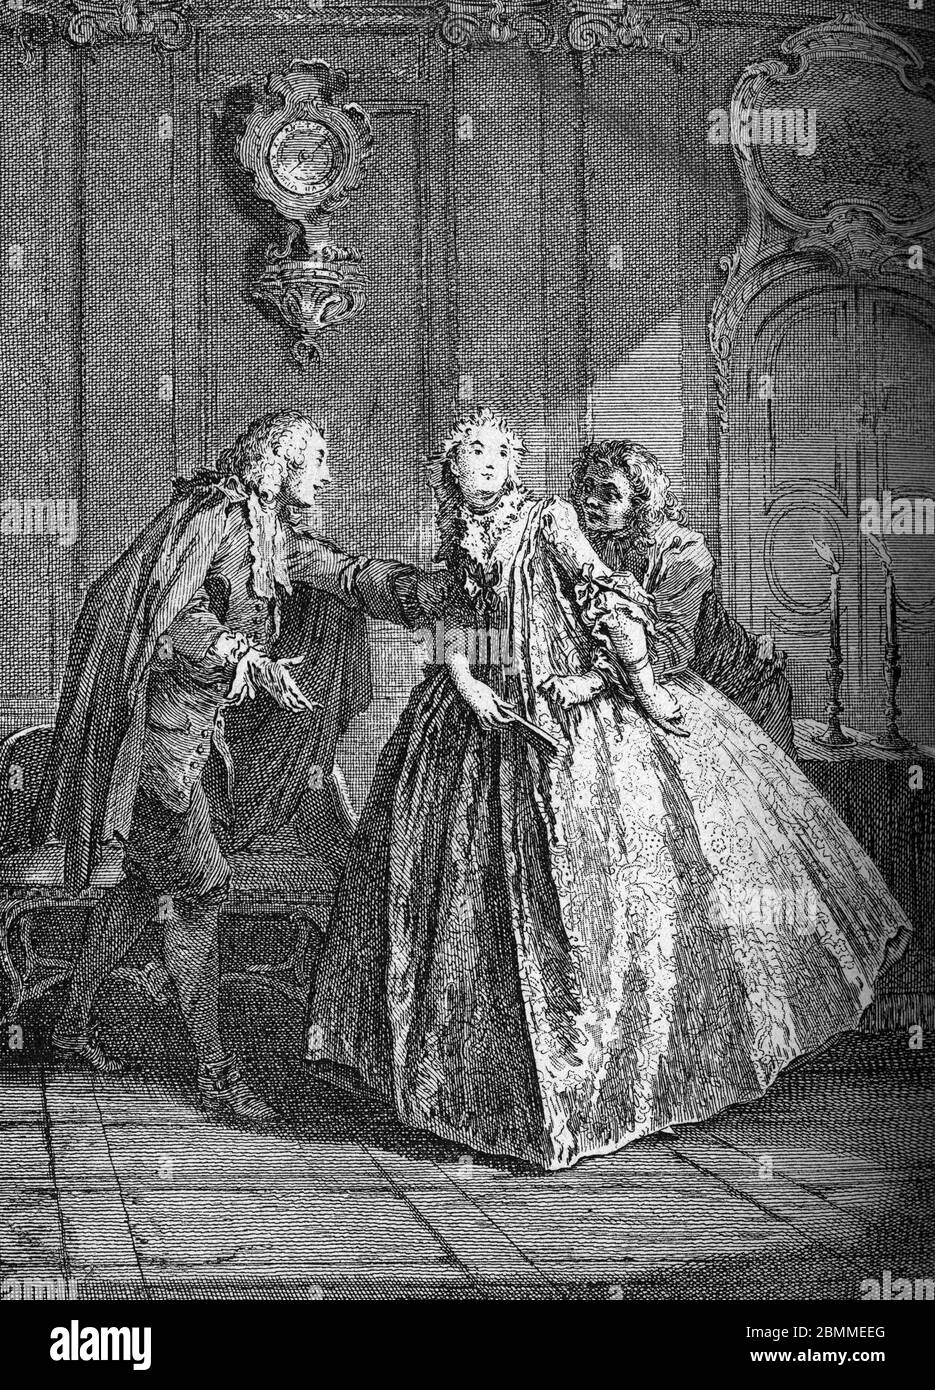 Tartuffe ou l'imposteur" (Tartufe) Gravure tiree de "Oeuvres" de Jean-Baptiste  Poquelin dit Moliere (Jean Baptiste Poquelin, 1622-1673), dramaturge e  Stock Photo - Alamy